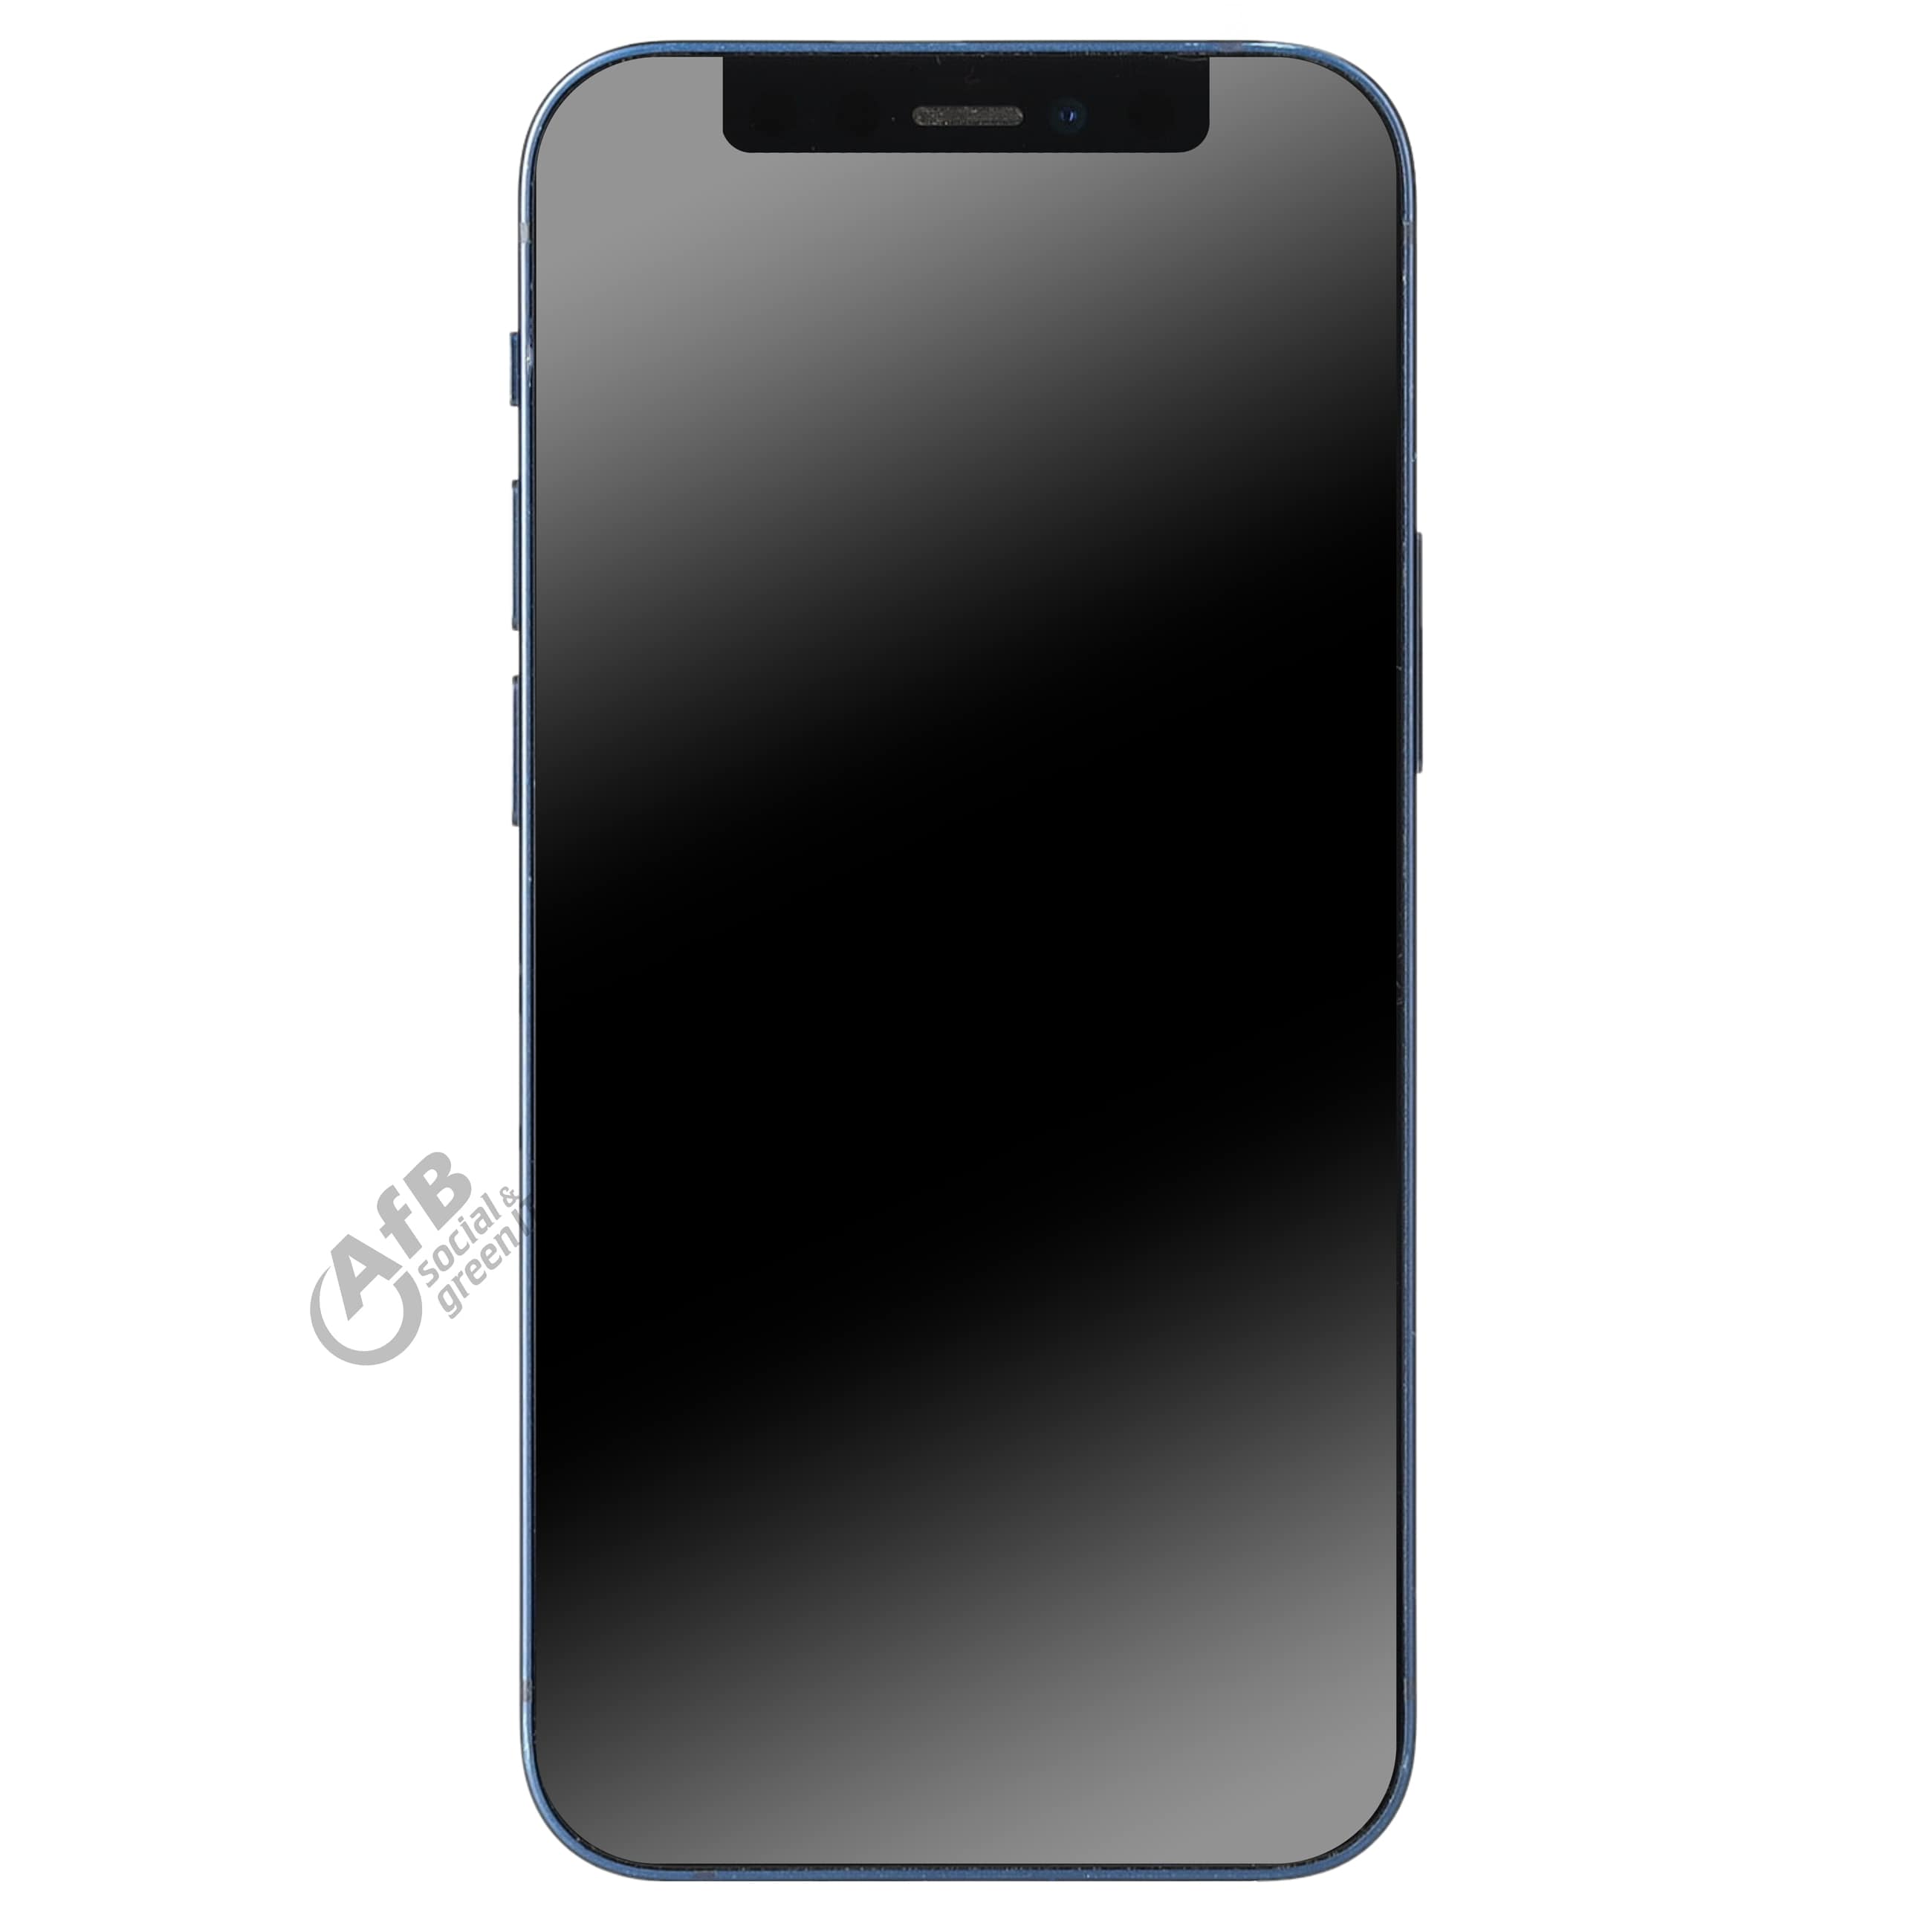 Apple iPhone 12 mini - 64 GB - Blue